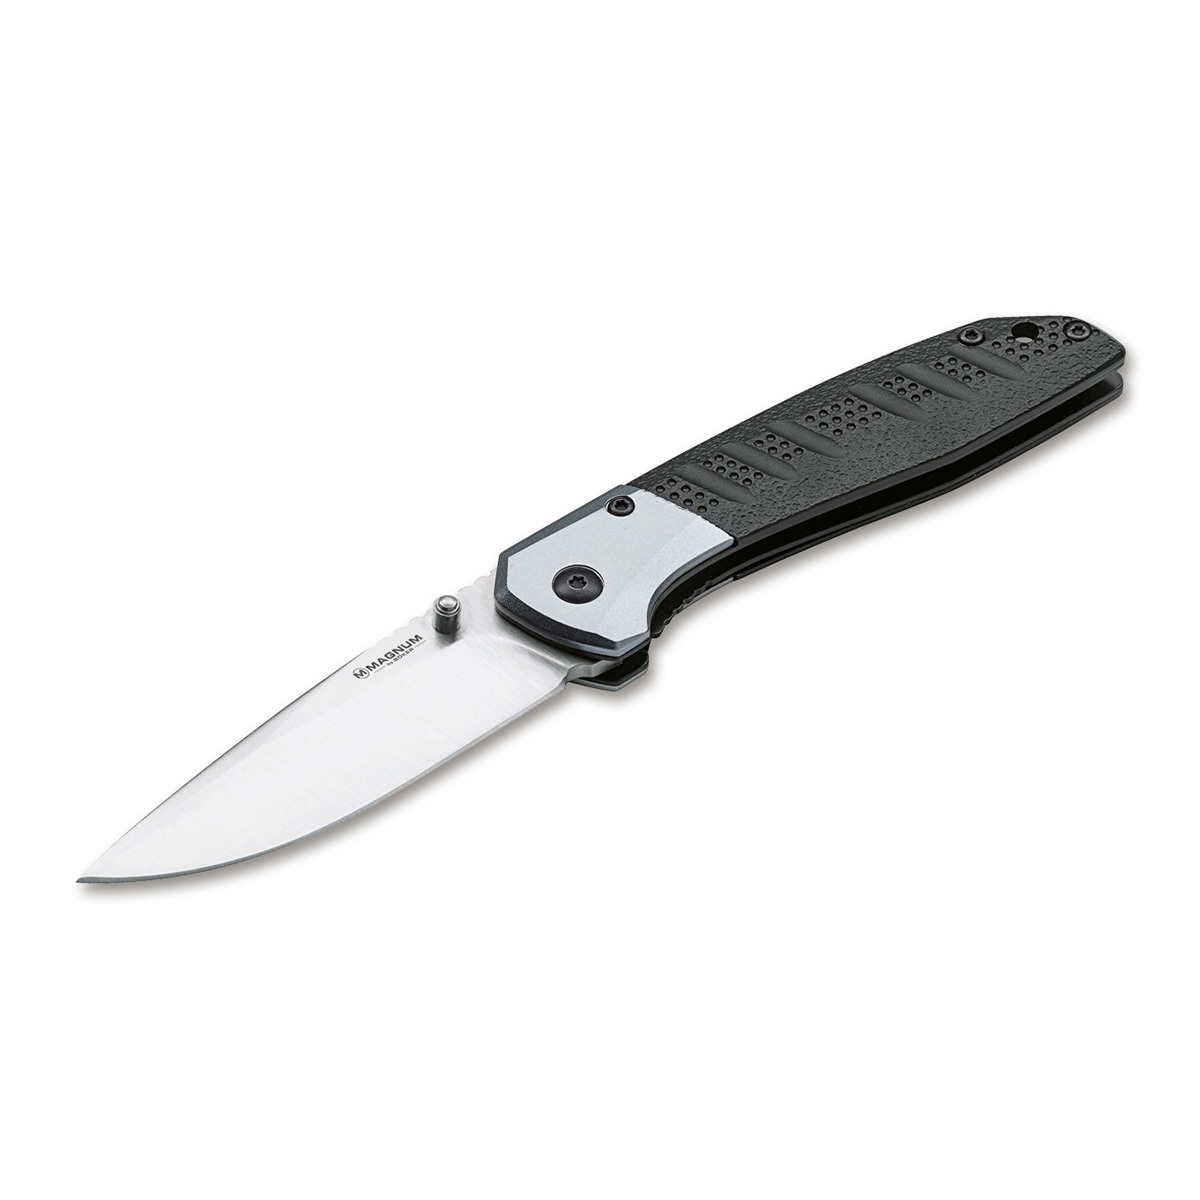 Нож складной Boker Advance pro edc, сталь 440C, рукоять алюминий складной нож cold steel ad 15 lite сталь aus10a рукоять frn